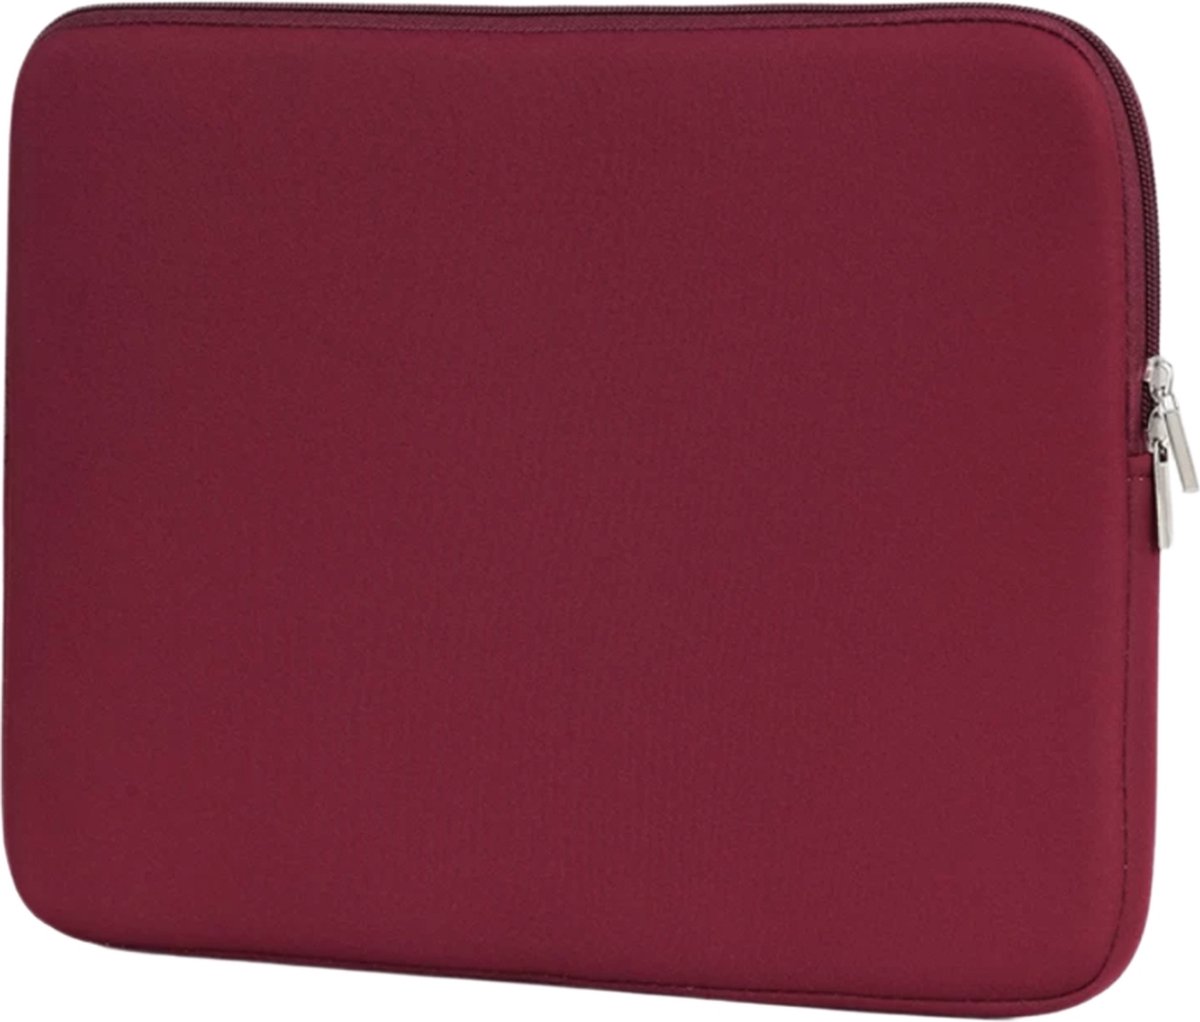 Laptoptas – case – 15,6 inch – stevige kwaliteit – soft touch – bordeaux rood - unisex - spatwaterbestending